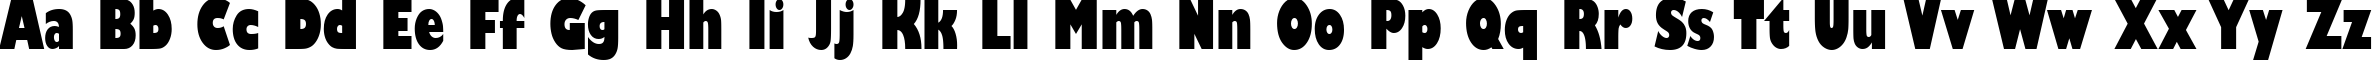 Пример написания английского алфавита шрифтом Gill Sans Ultra Bold Condensed